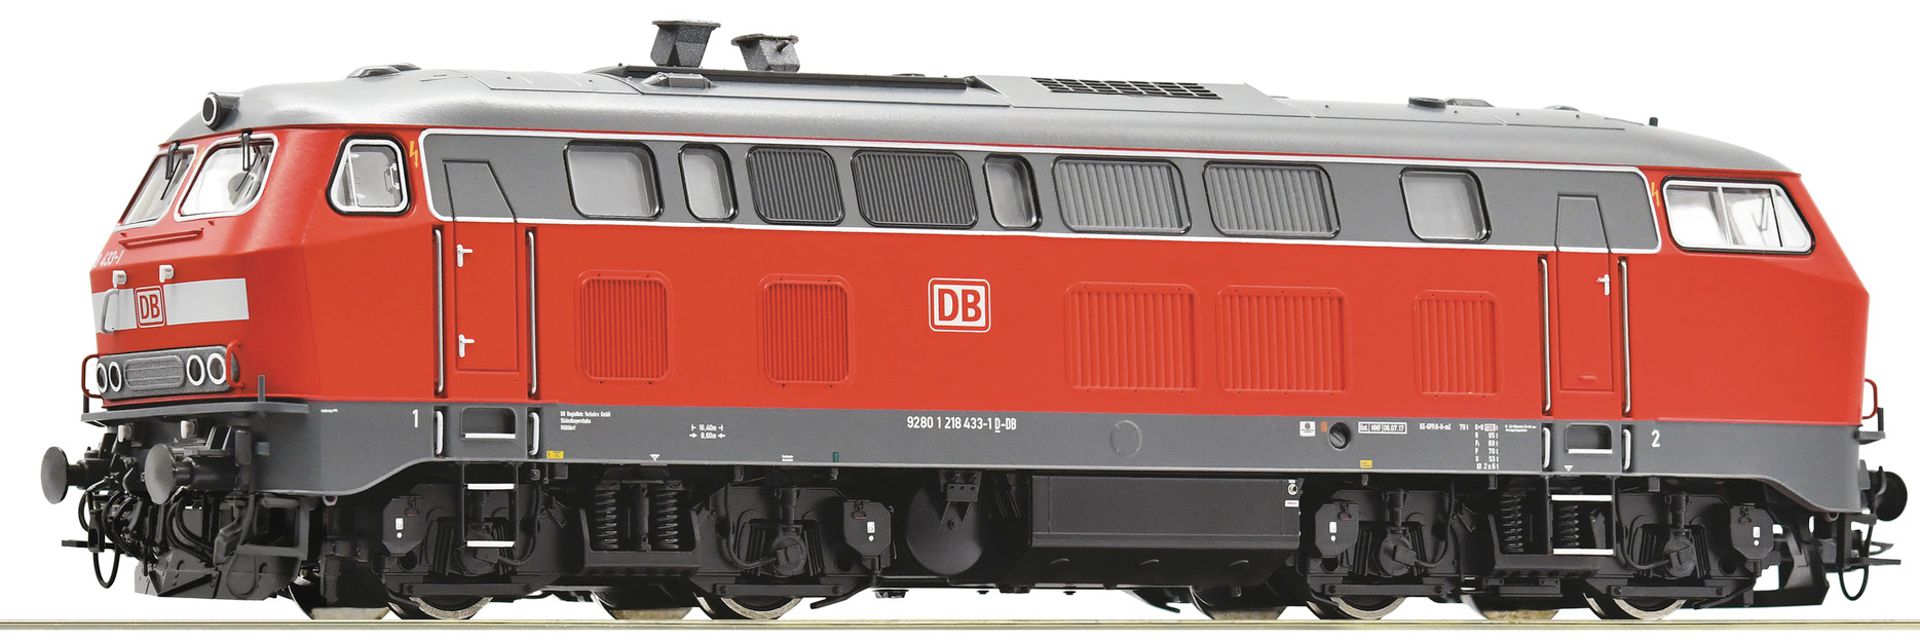 Roco 7300053 - Diesellok 218 433-1, DBAG, Ep.VI